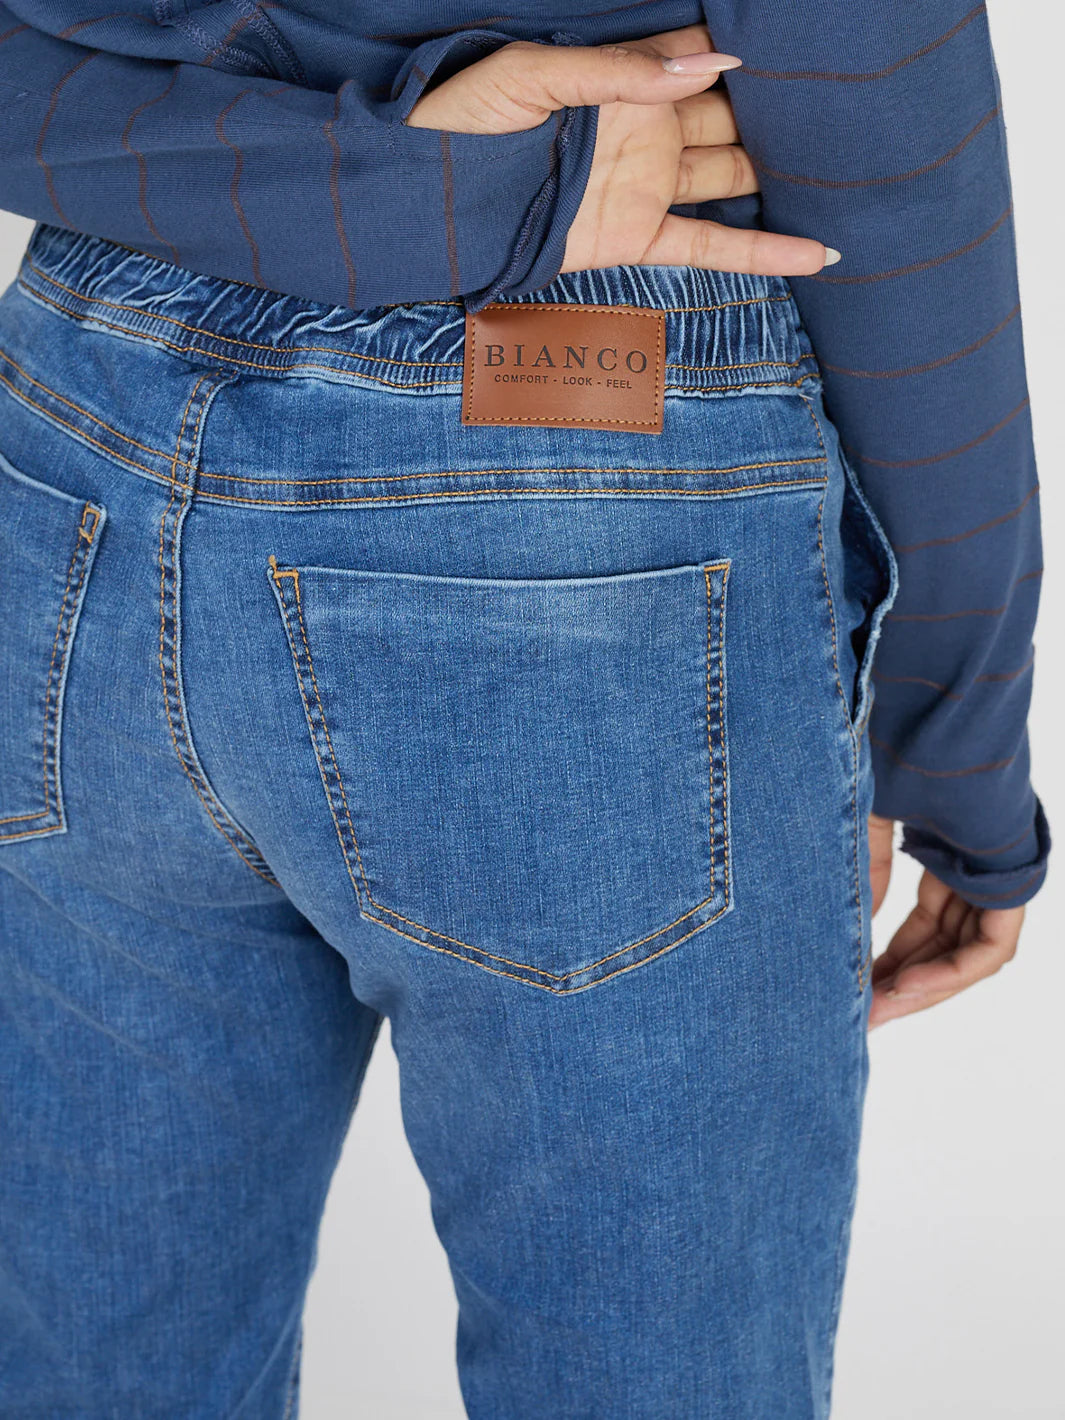 Denim Hadley Relaxed Jean - Bianco Jeans - Beechworth Emporium